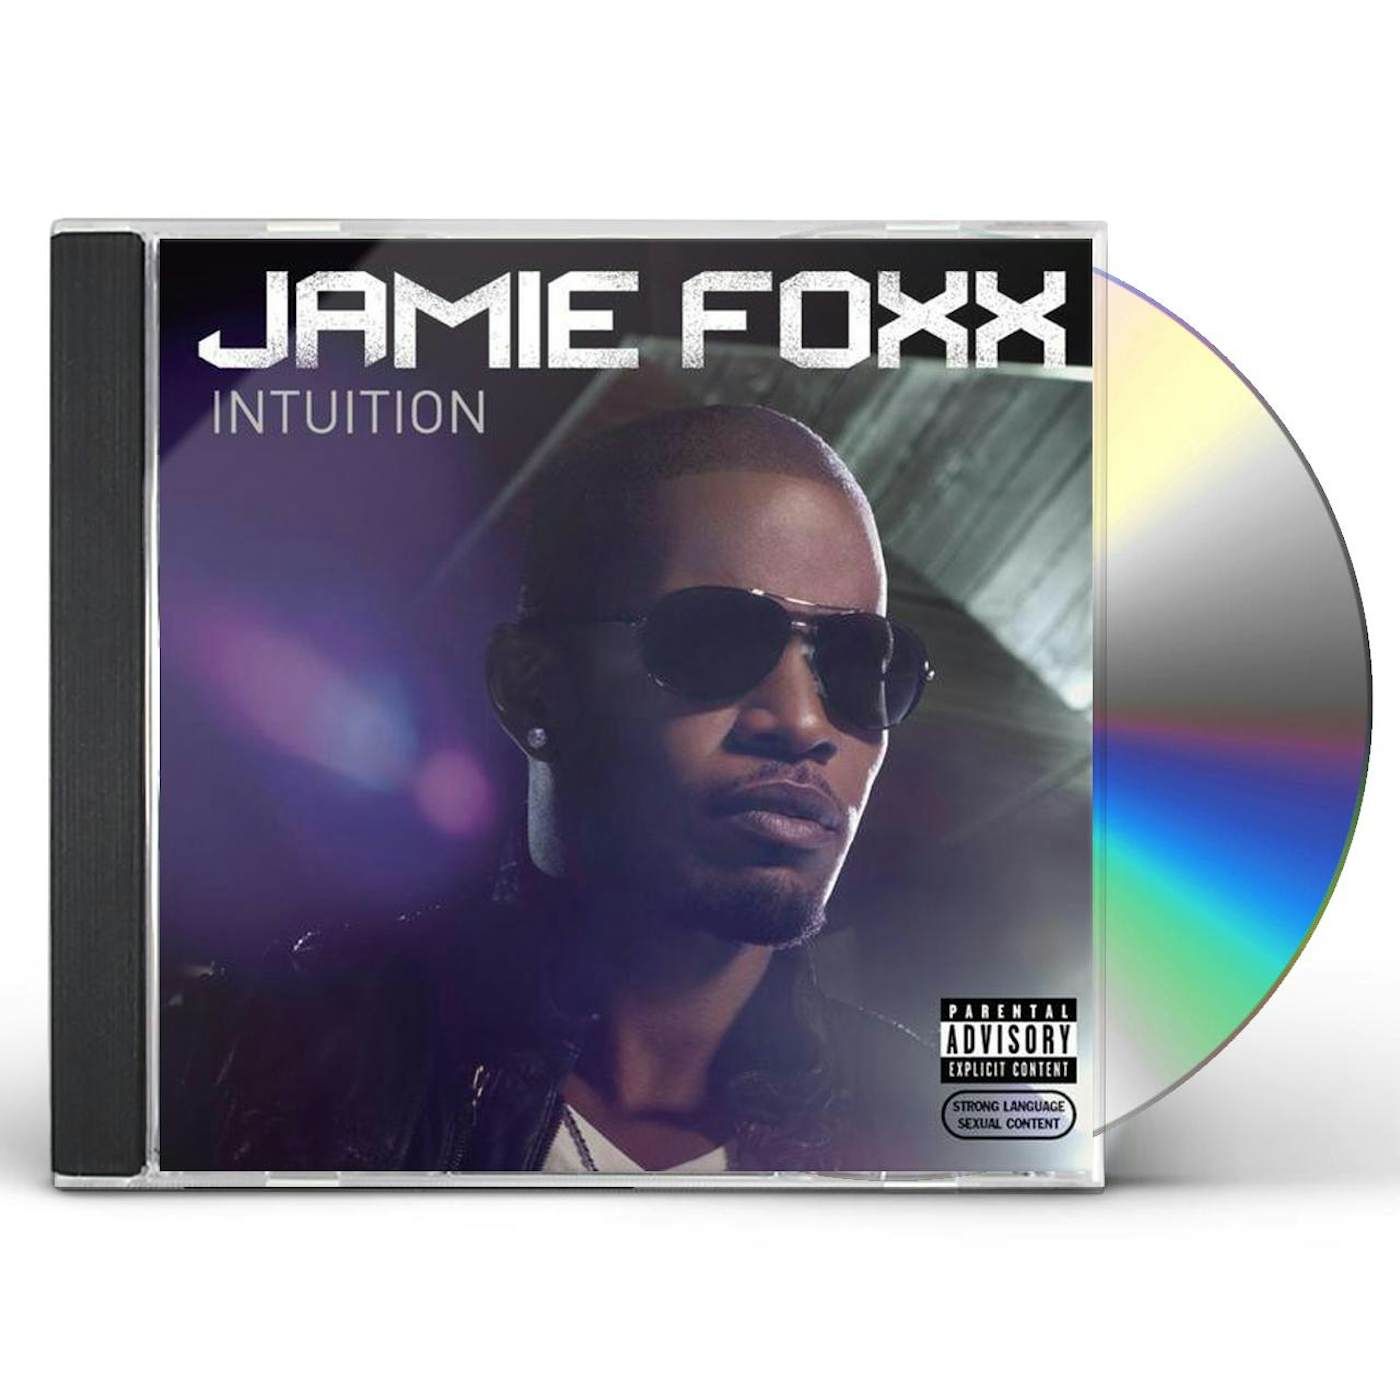 Jamie Foxx INTUITION CD